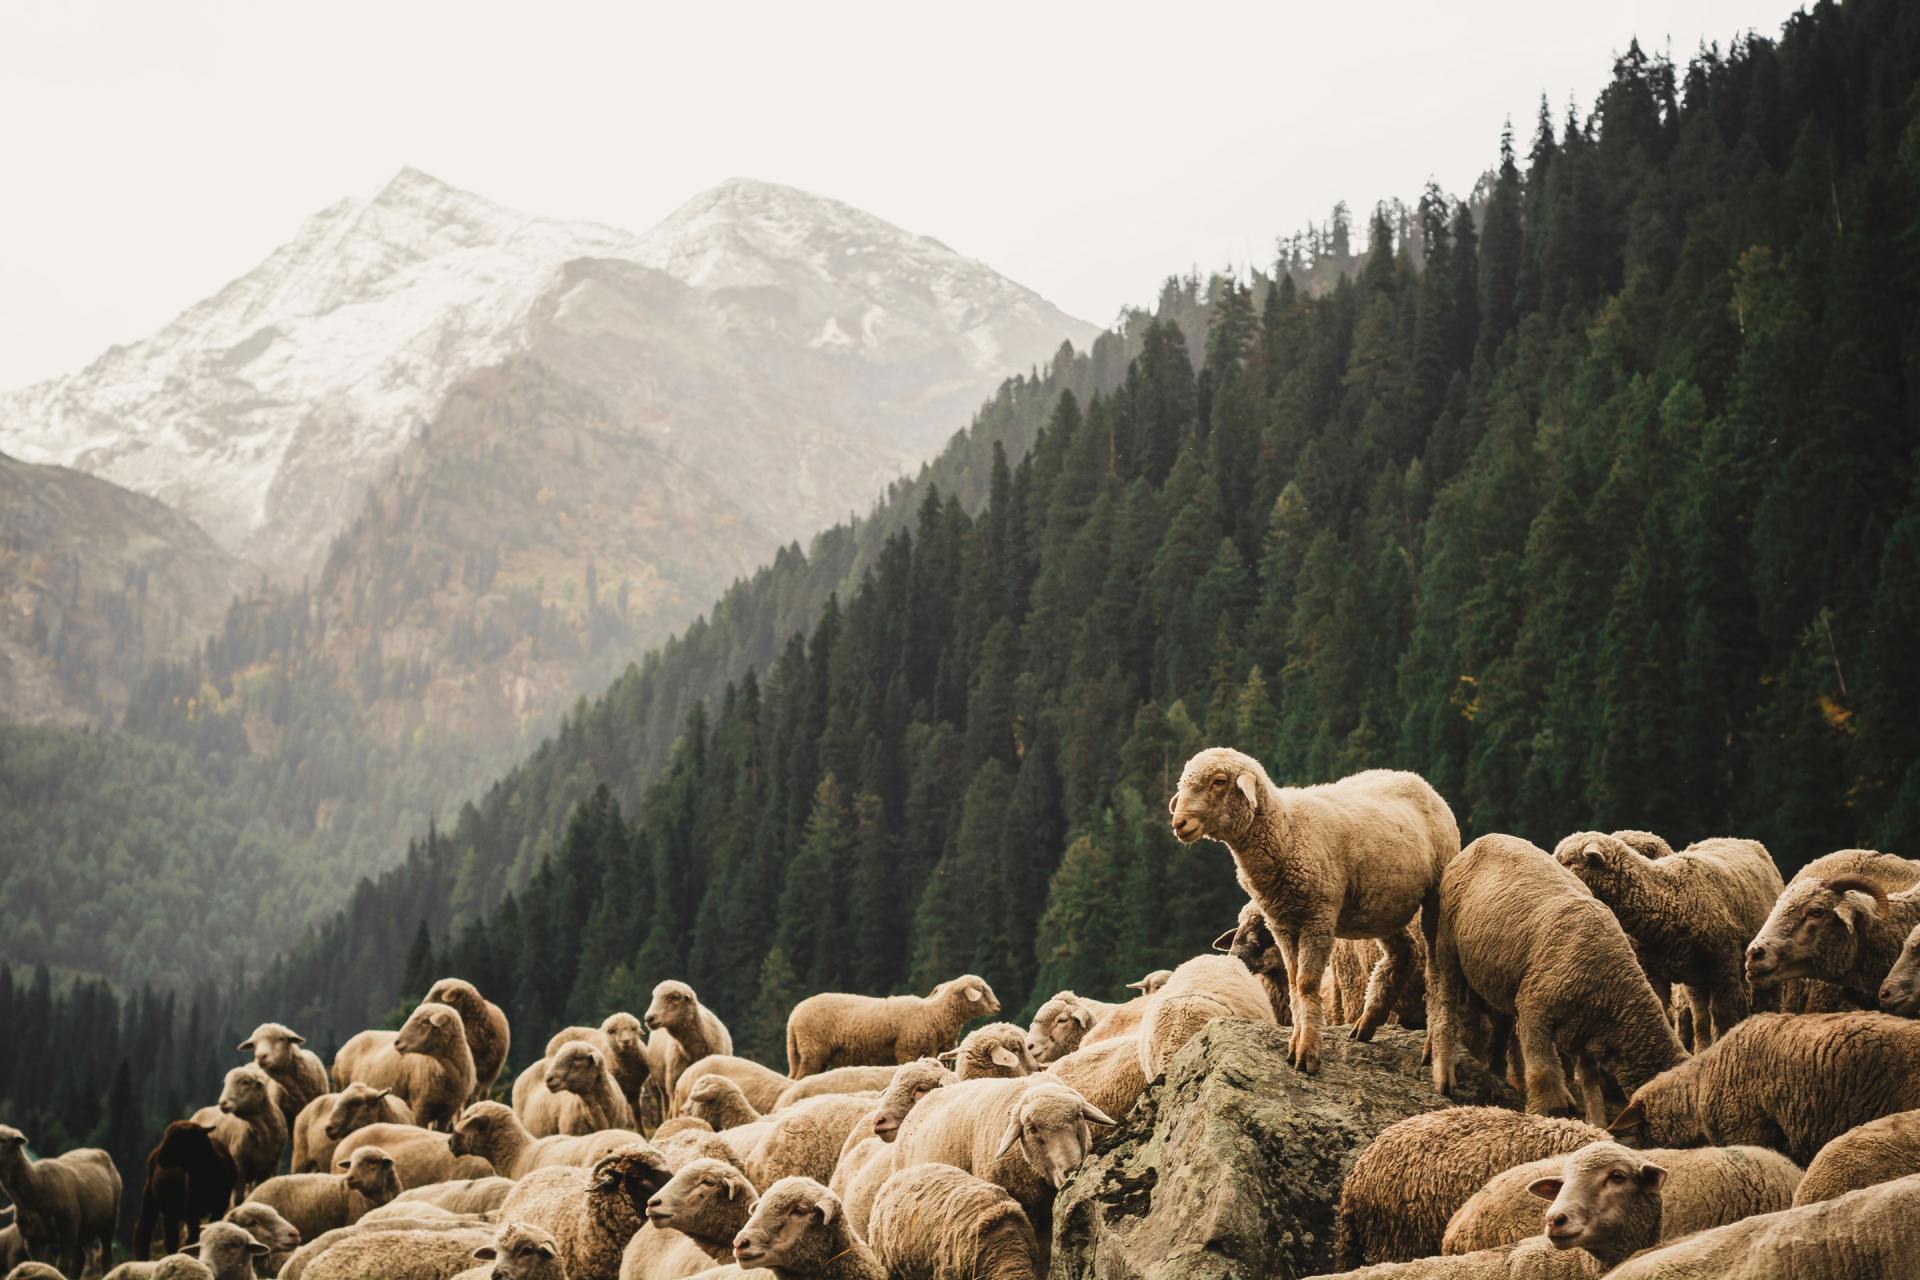 Mountain sheep